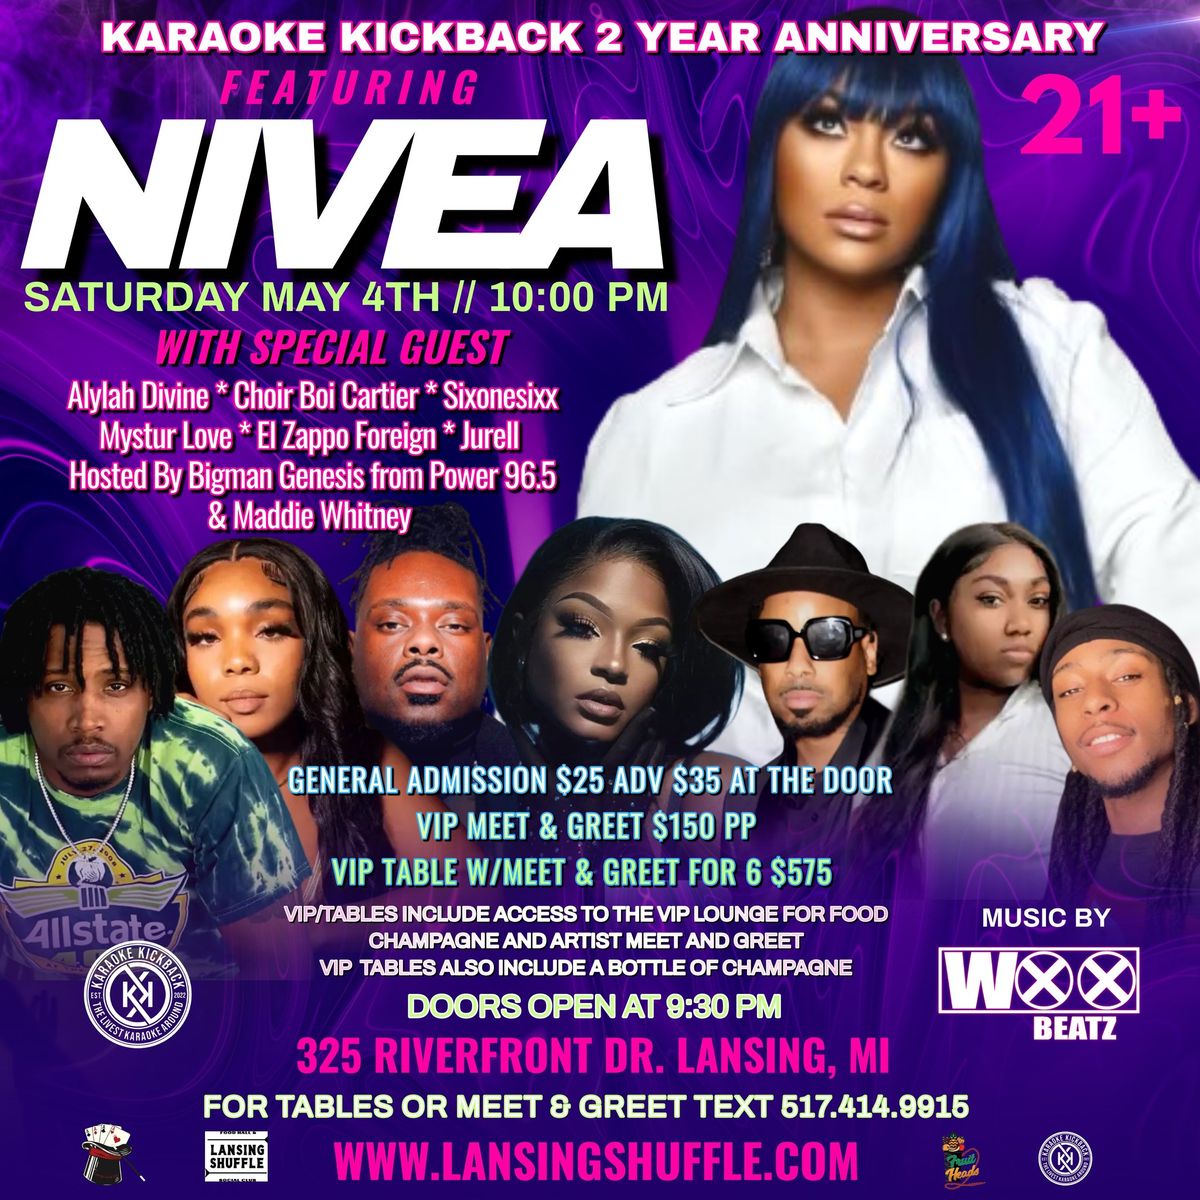 Karaoke Kickback 2 yr anniversary featuring Nivea 